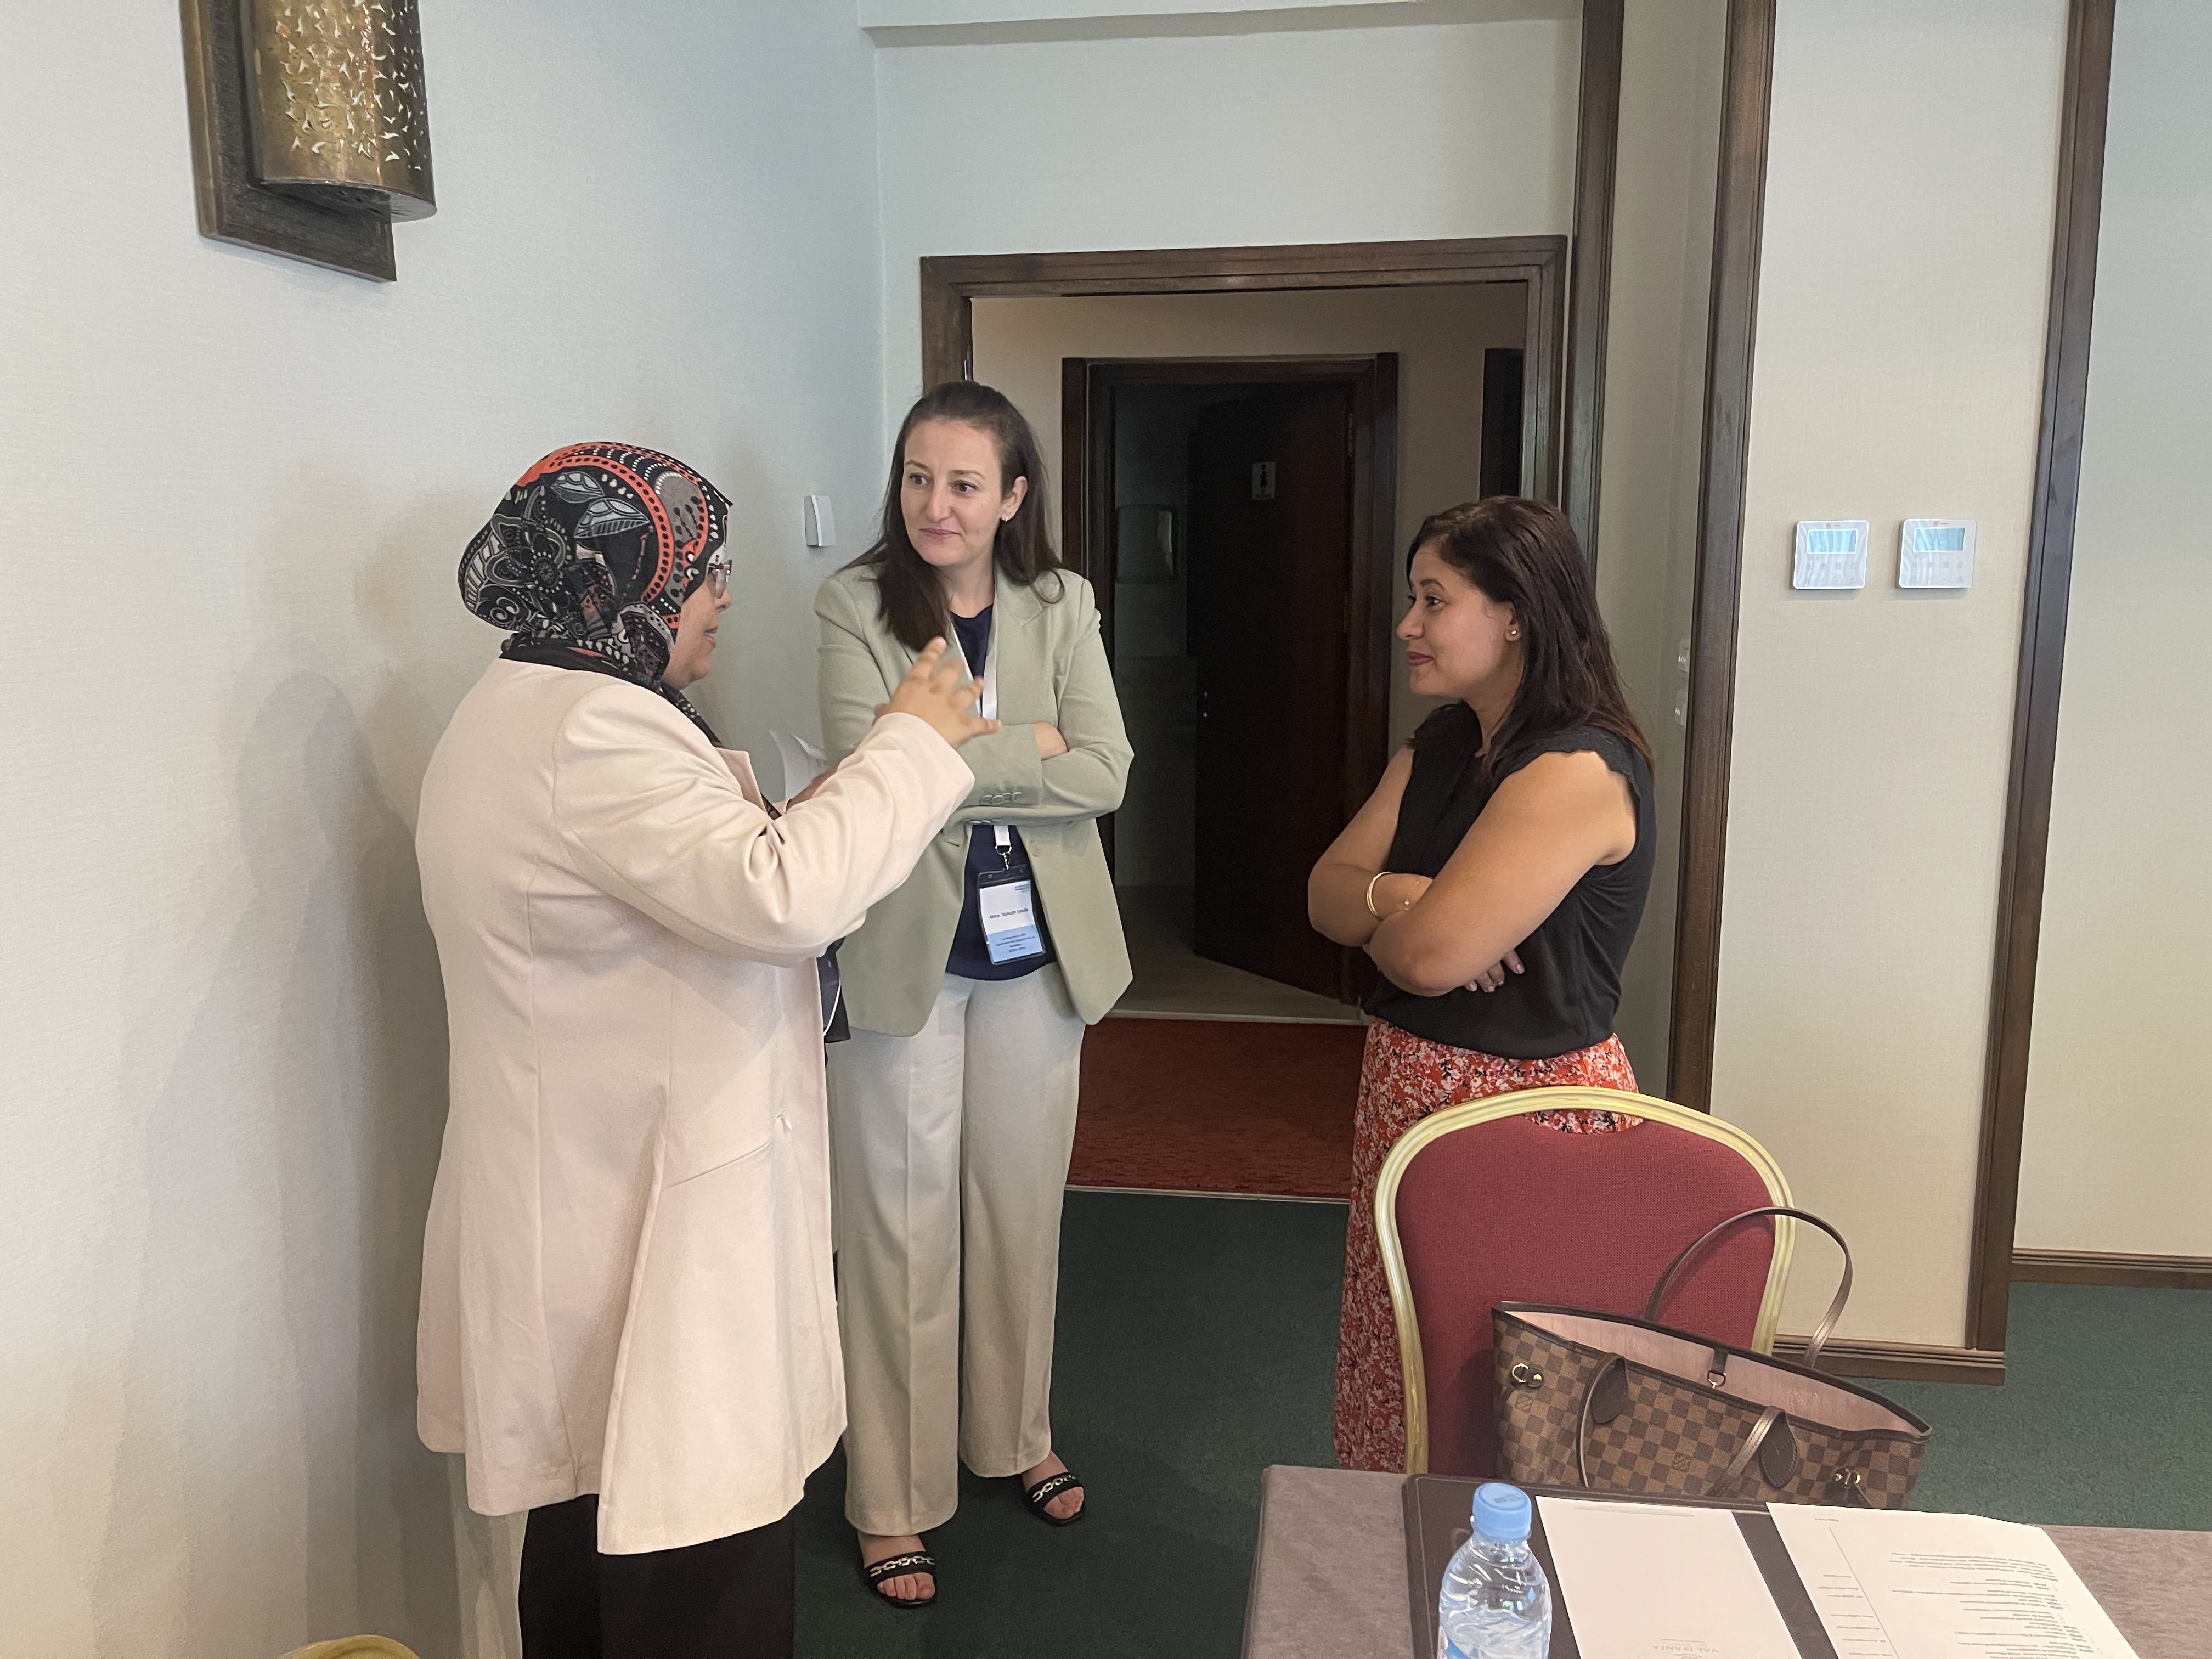 DNV Business Assurance Morocco-Consultants workshop